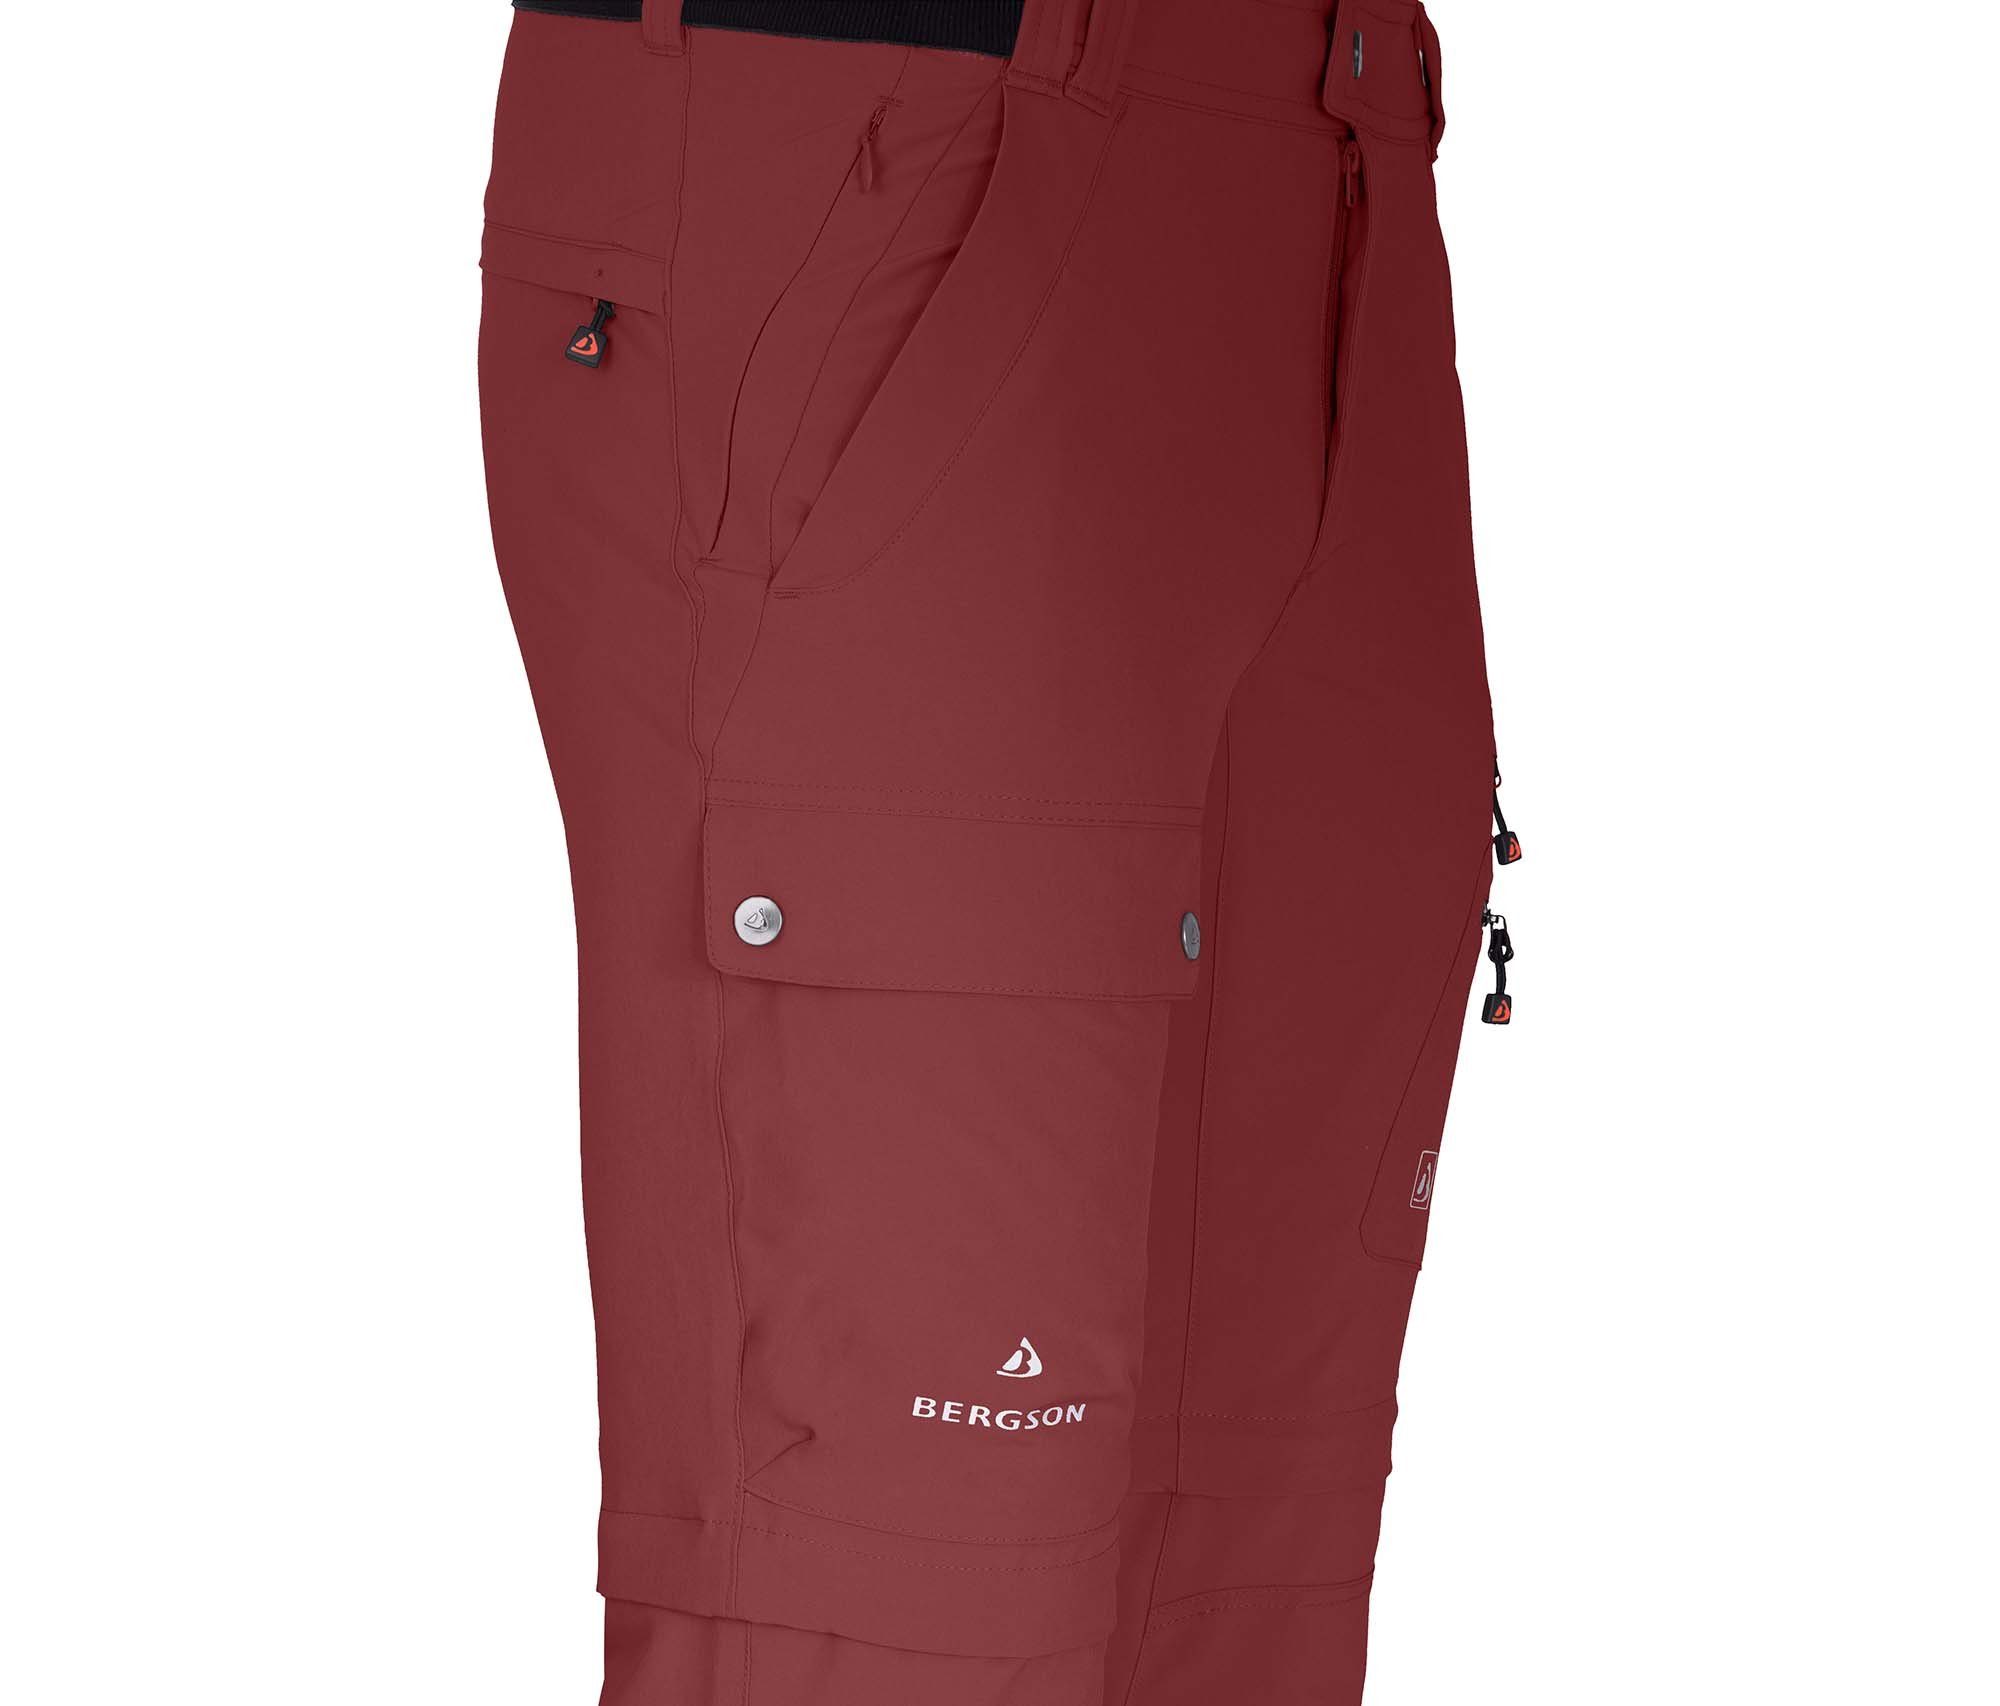 Bergson Zip-off-Hose Wanderhose, 8 recycelt, rot FROSLEV Taschen, Herren elastisch, Bermuda braun Zipp-Off Normalgrößen